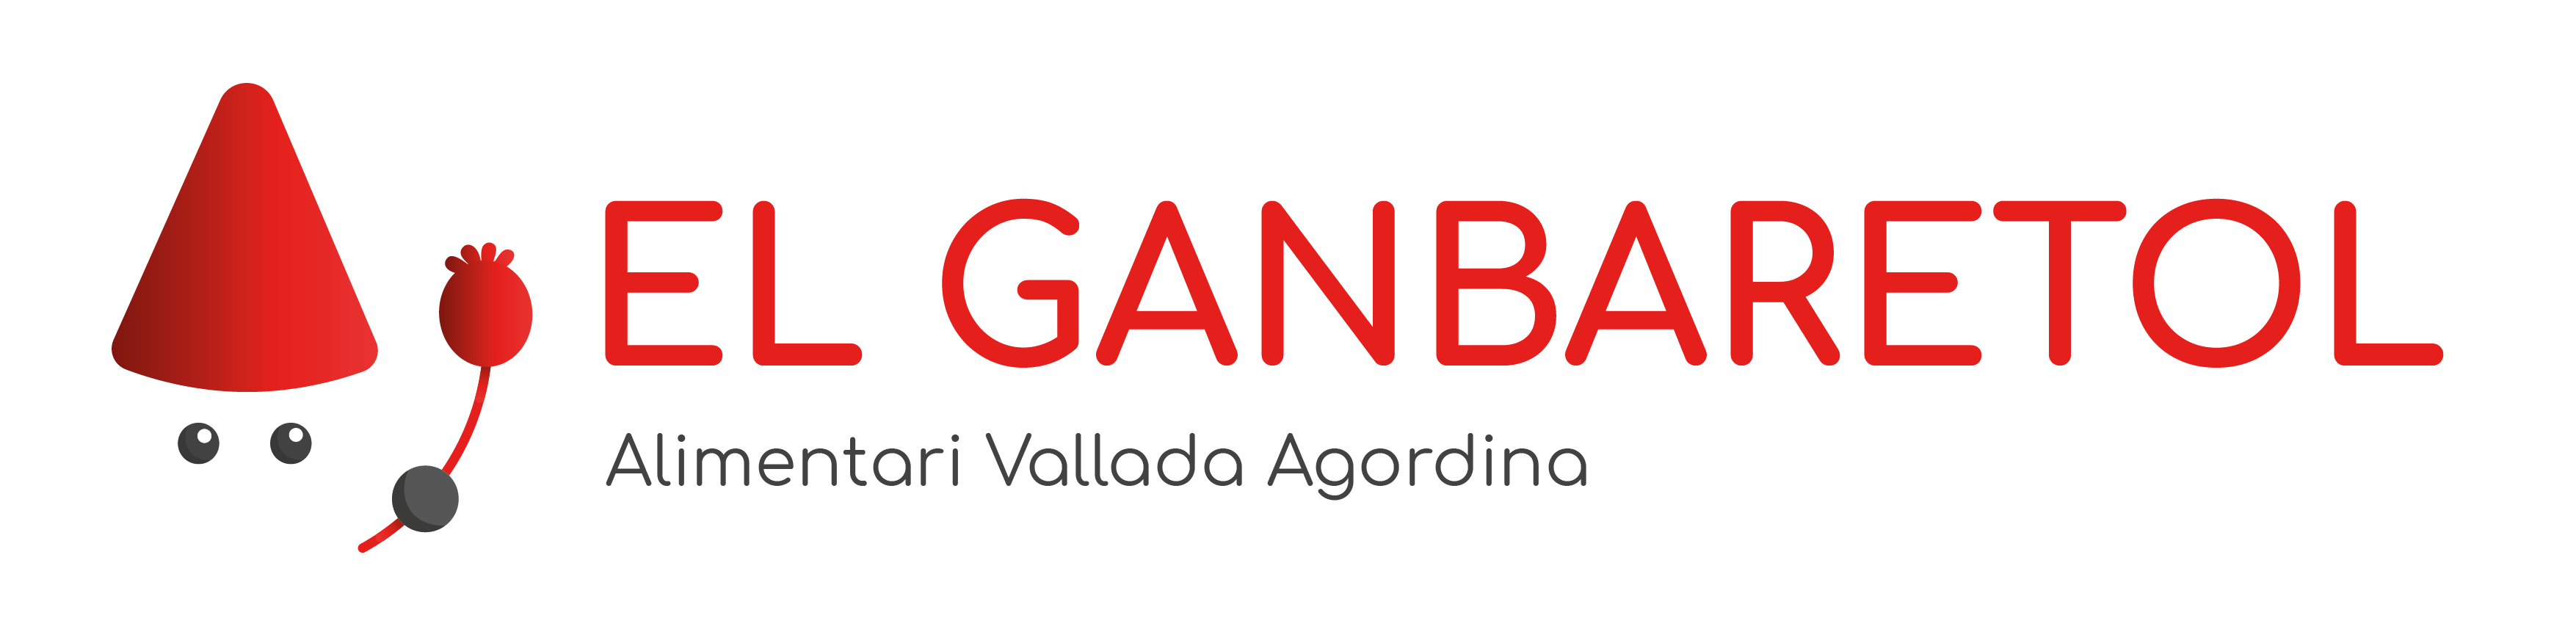 www.elganbaretol.com